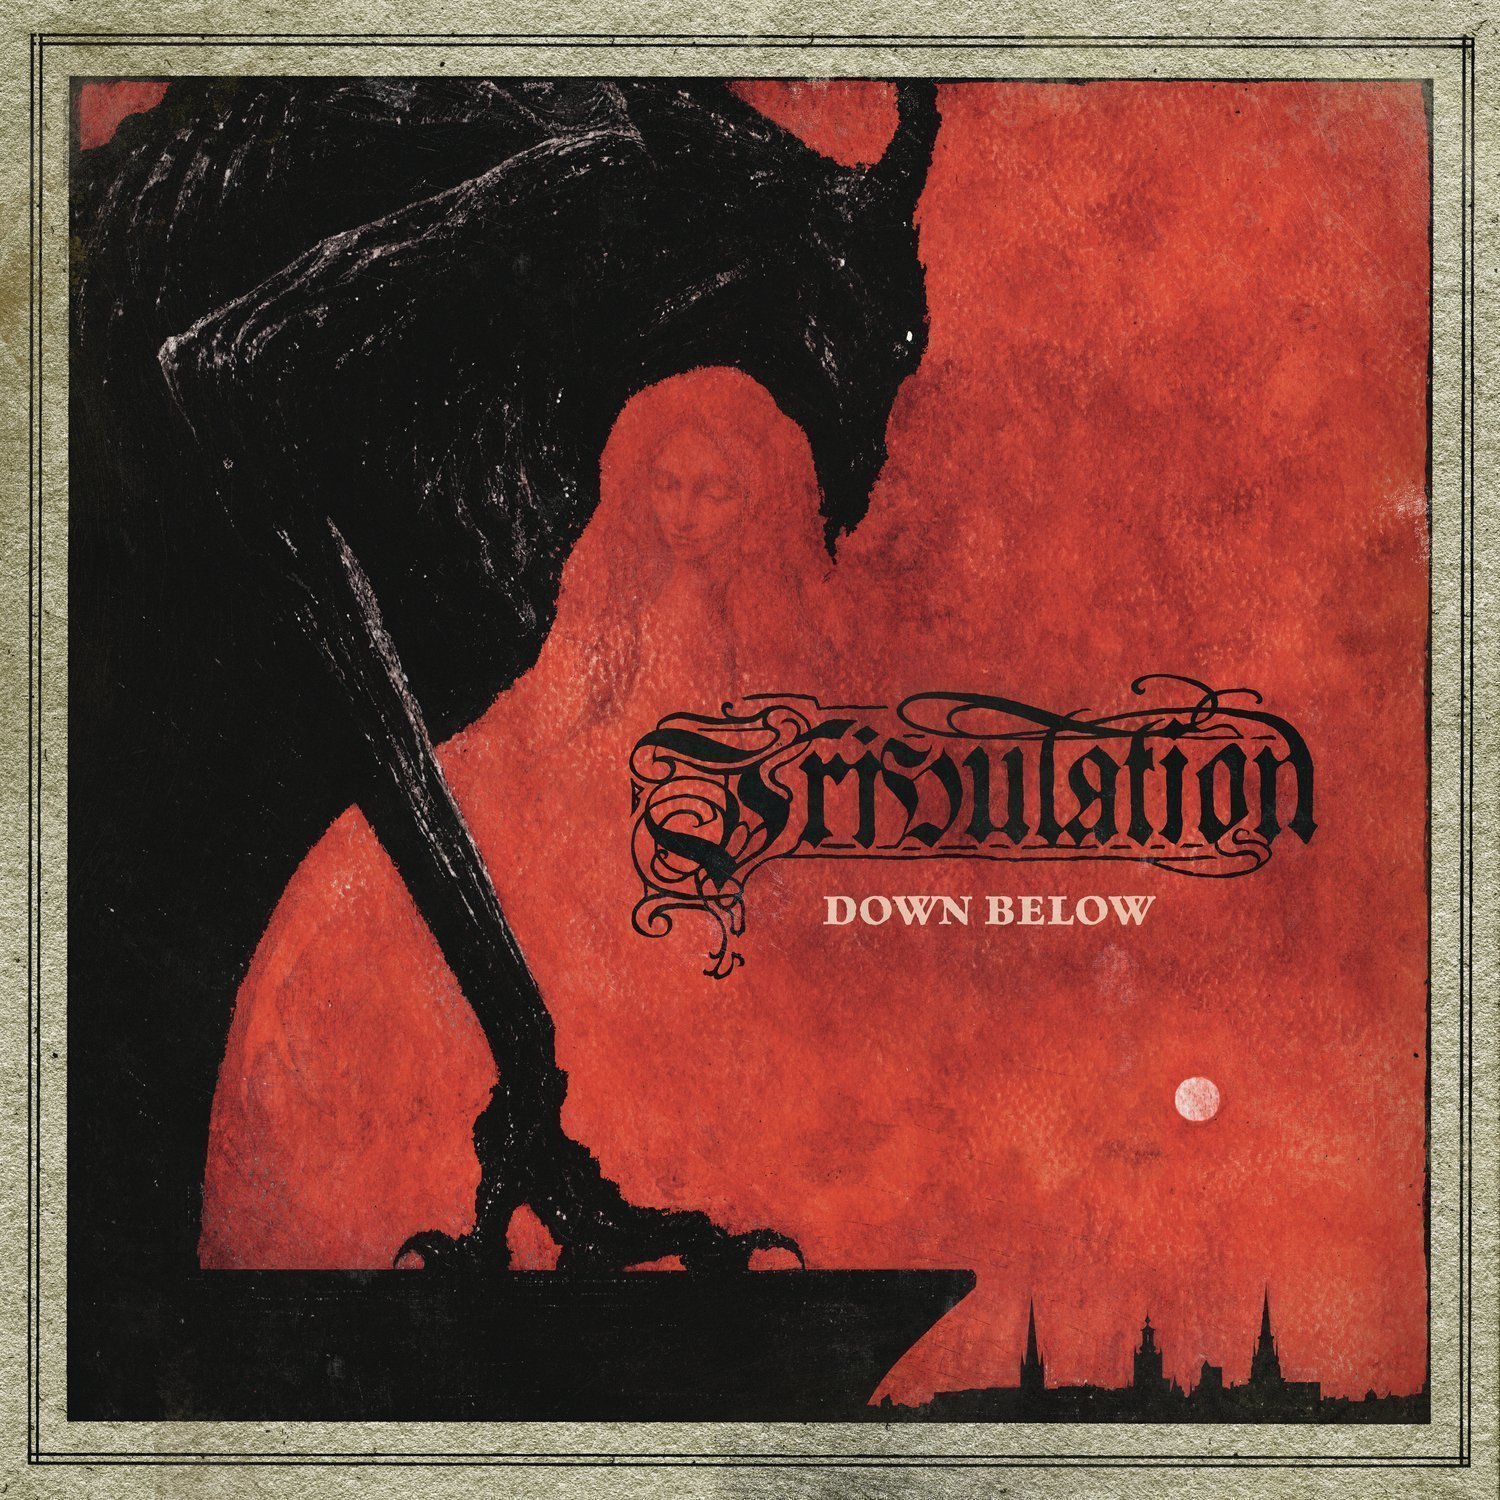 Vinylplade Tribulation Down Below (Gatefold Sleeve) (Vinyl LP)